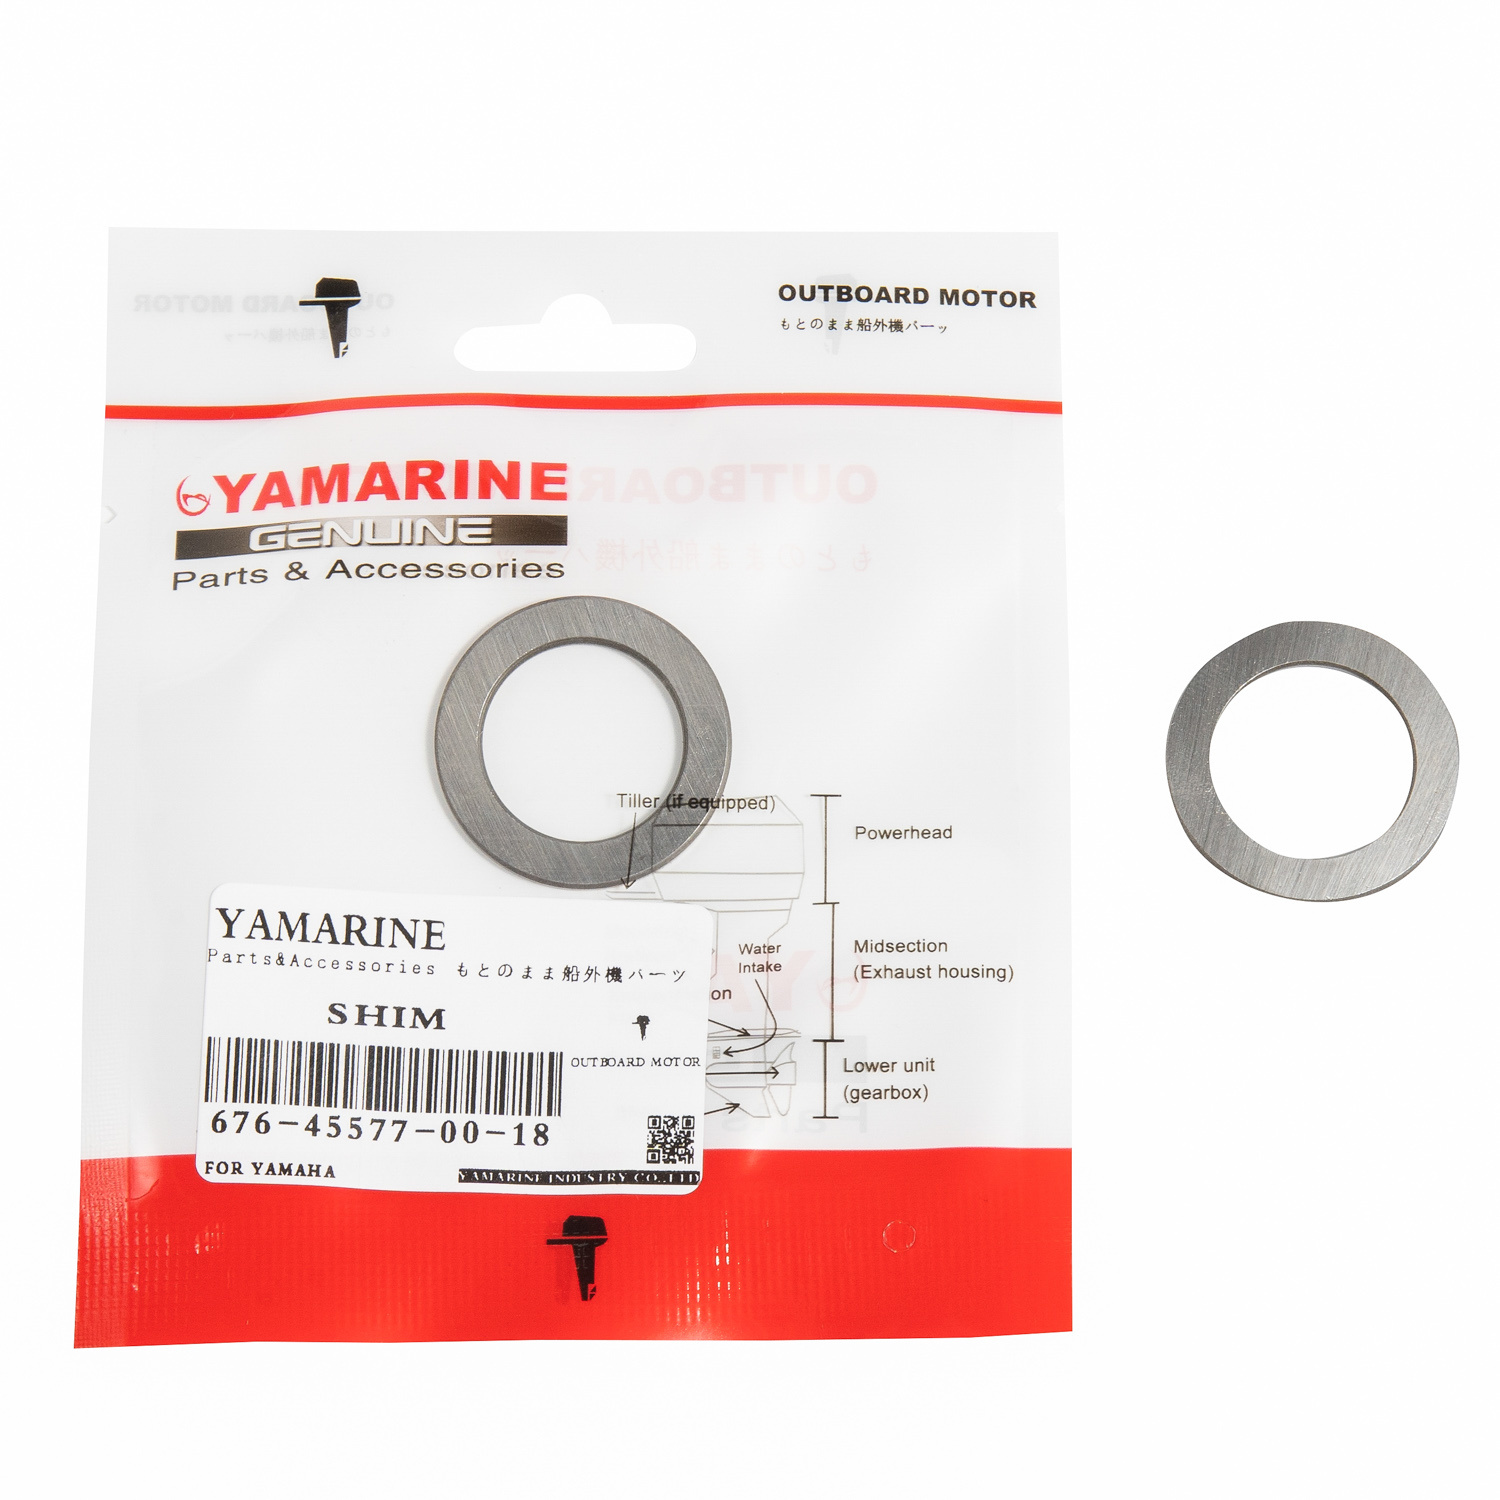 Yamarine Outboard Shim 676-45577-18-00 for YAMAHA Outboard Reverse Gear